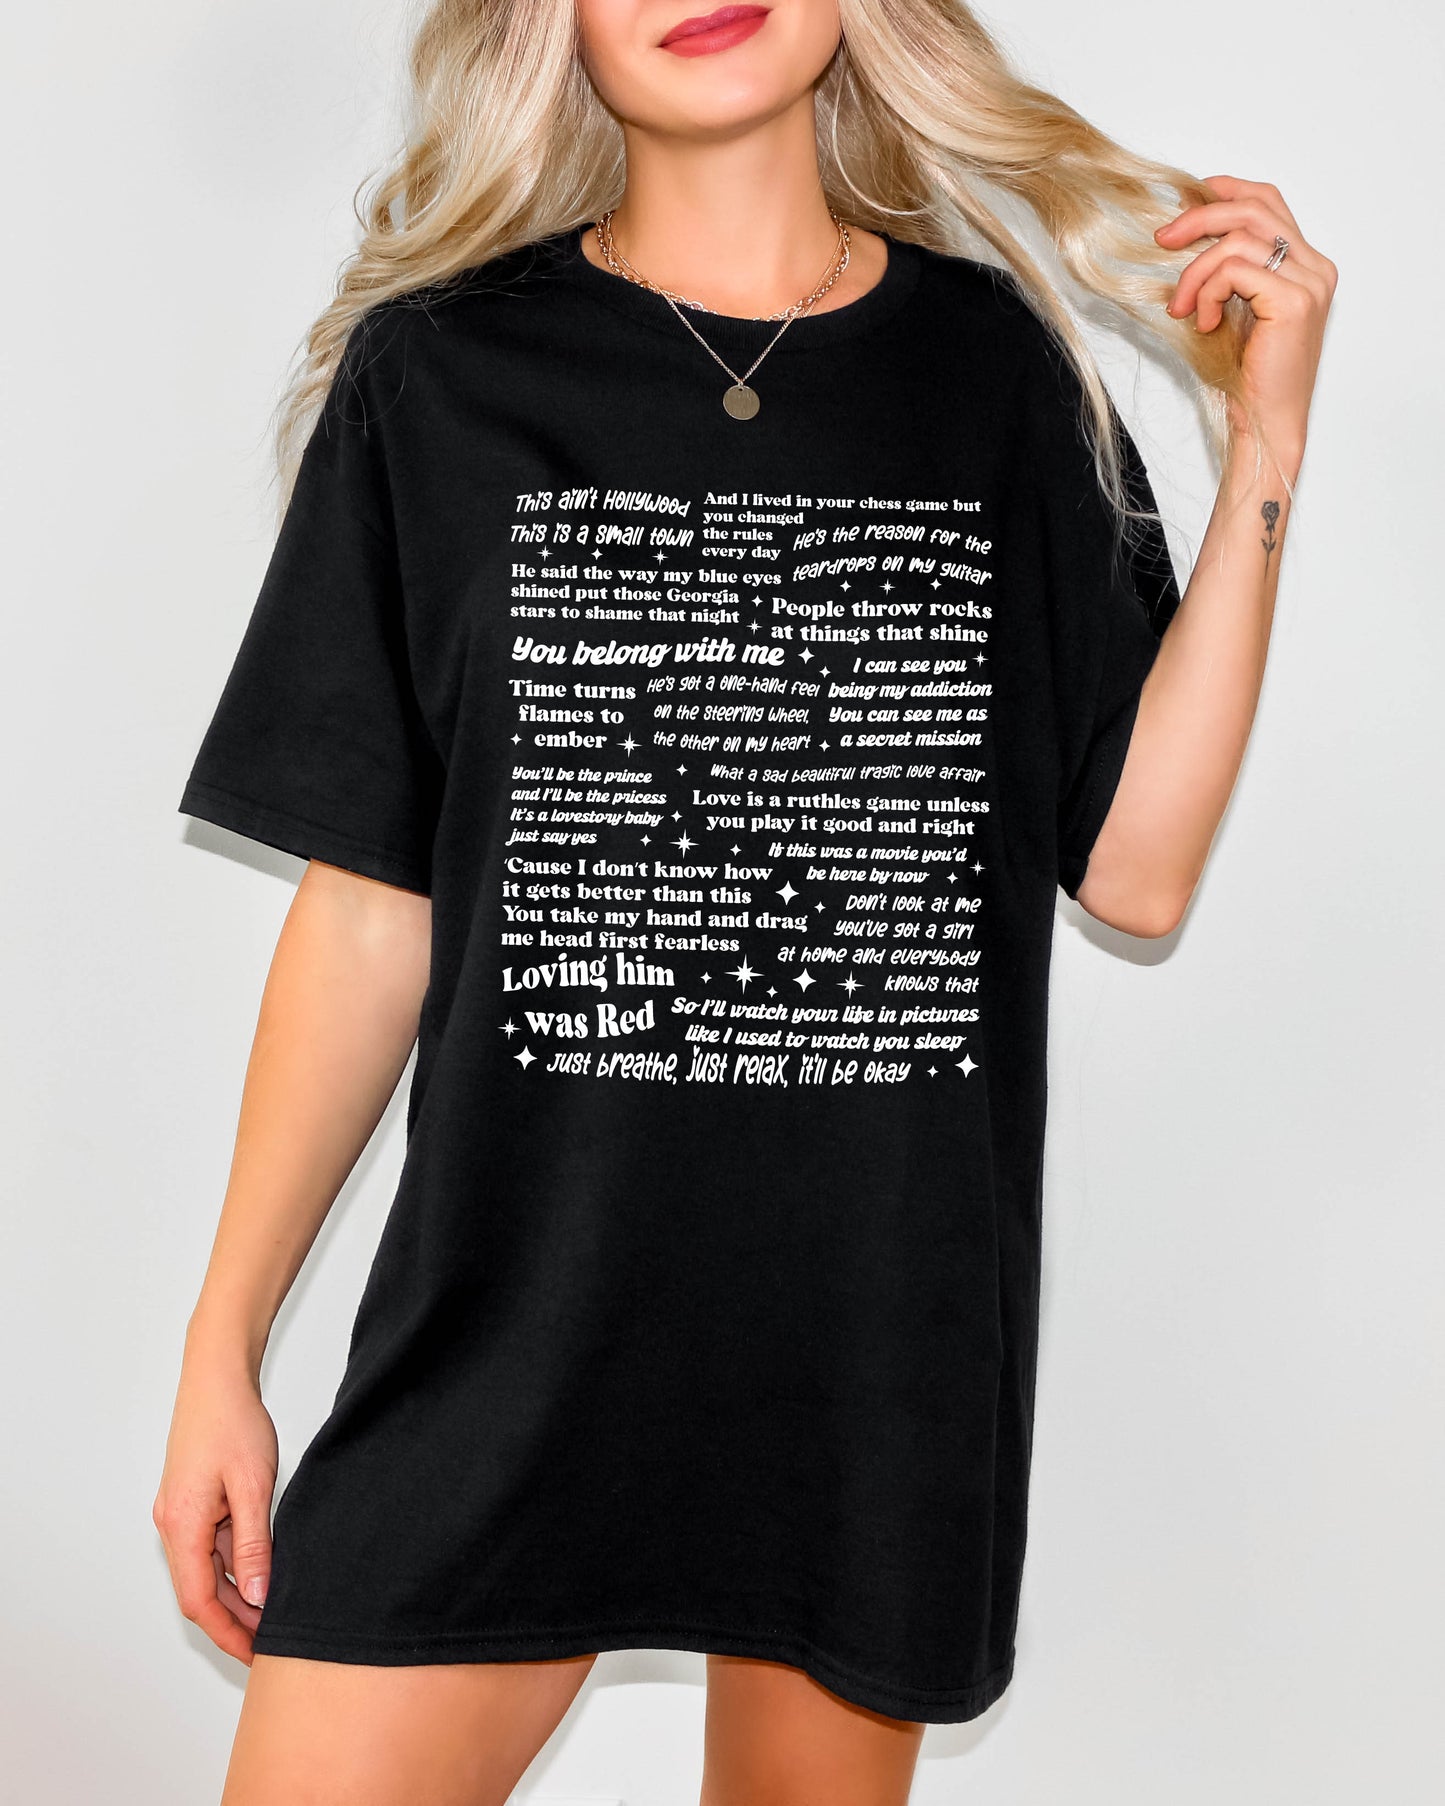 Taylor Swift Lyrics T-Shirt (Early Era)